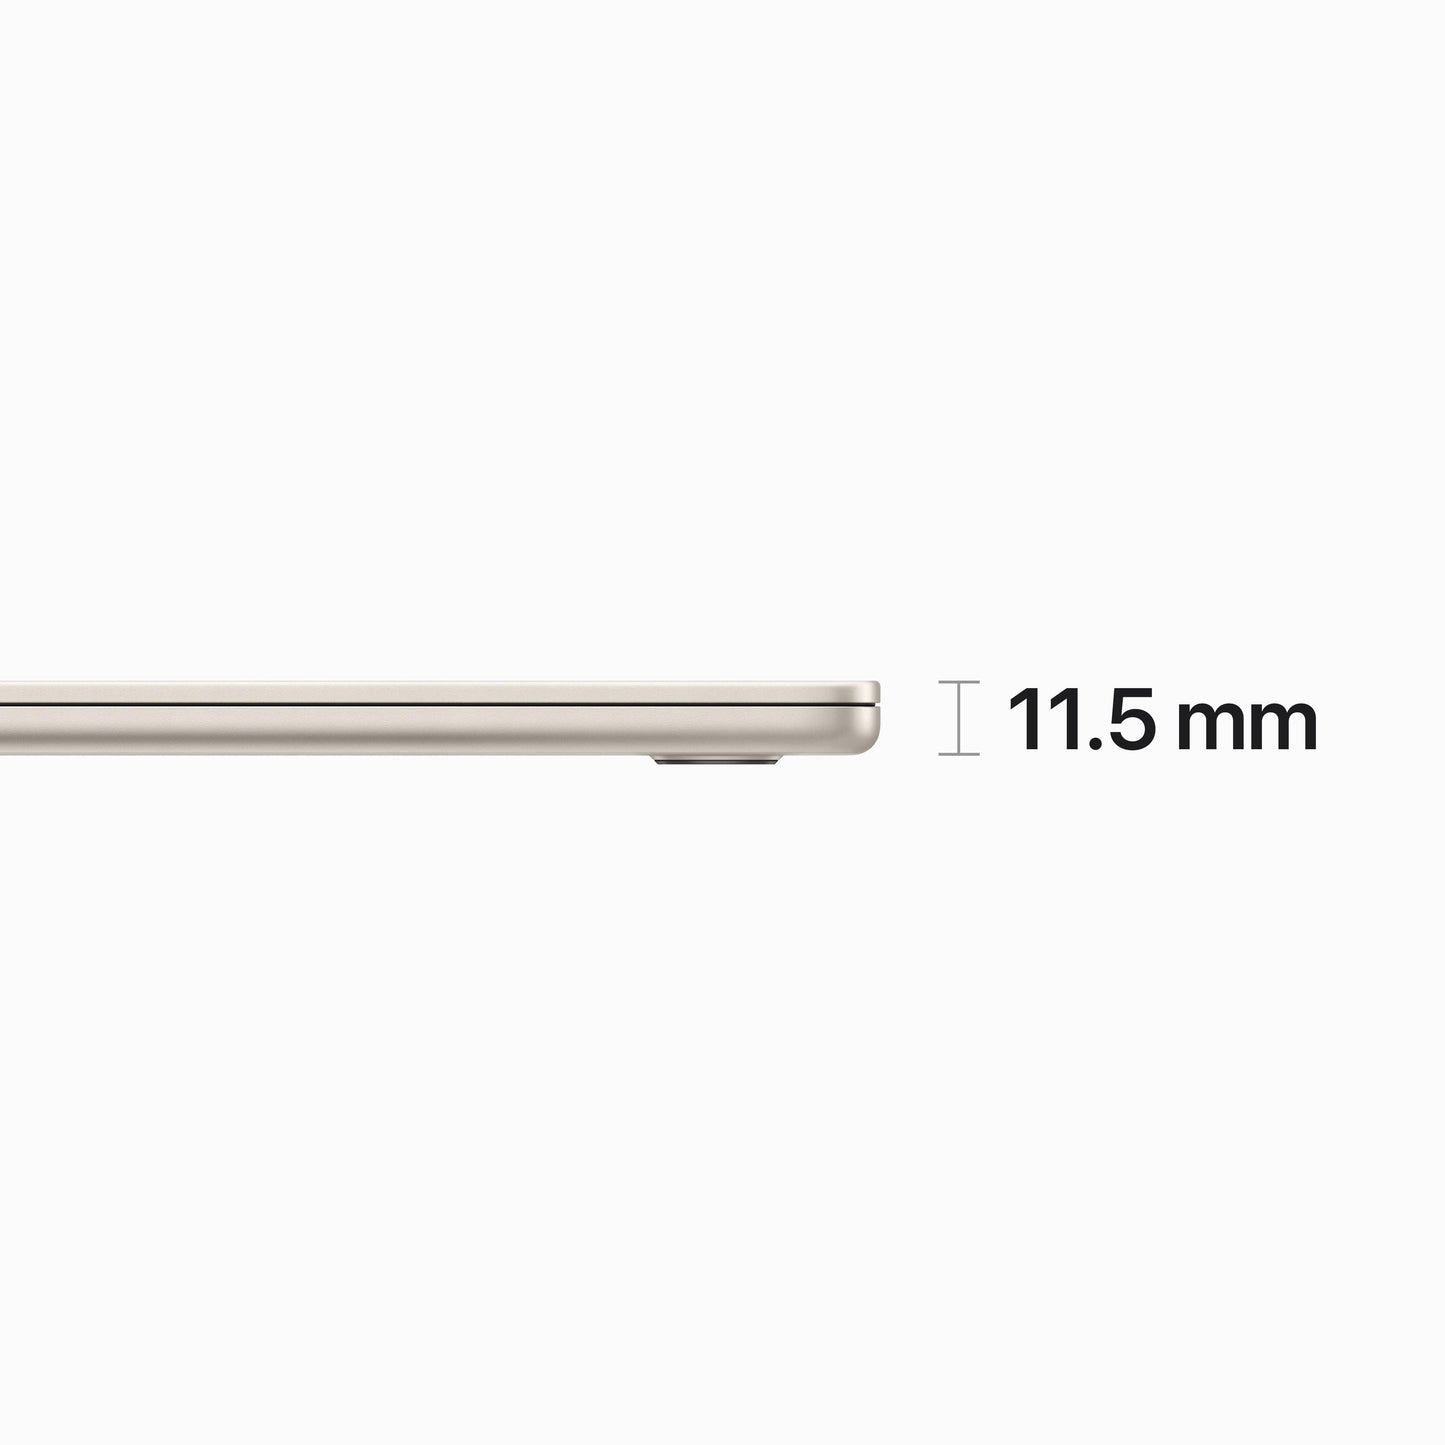 15-inch MacBook Air: Apple M2 chip with 8_core CPU and 10_core GPU, 512GB SSD - Starlight